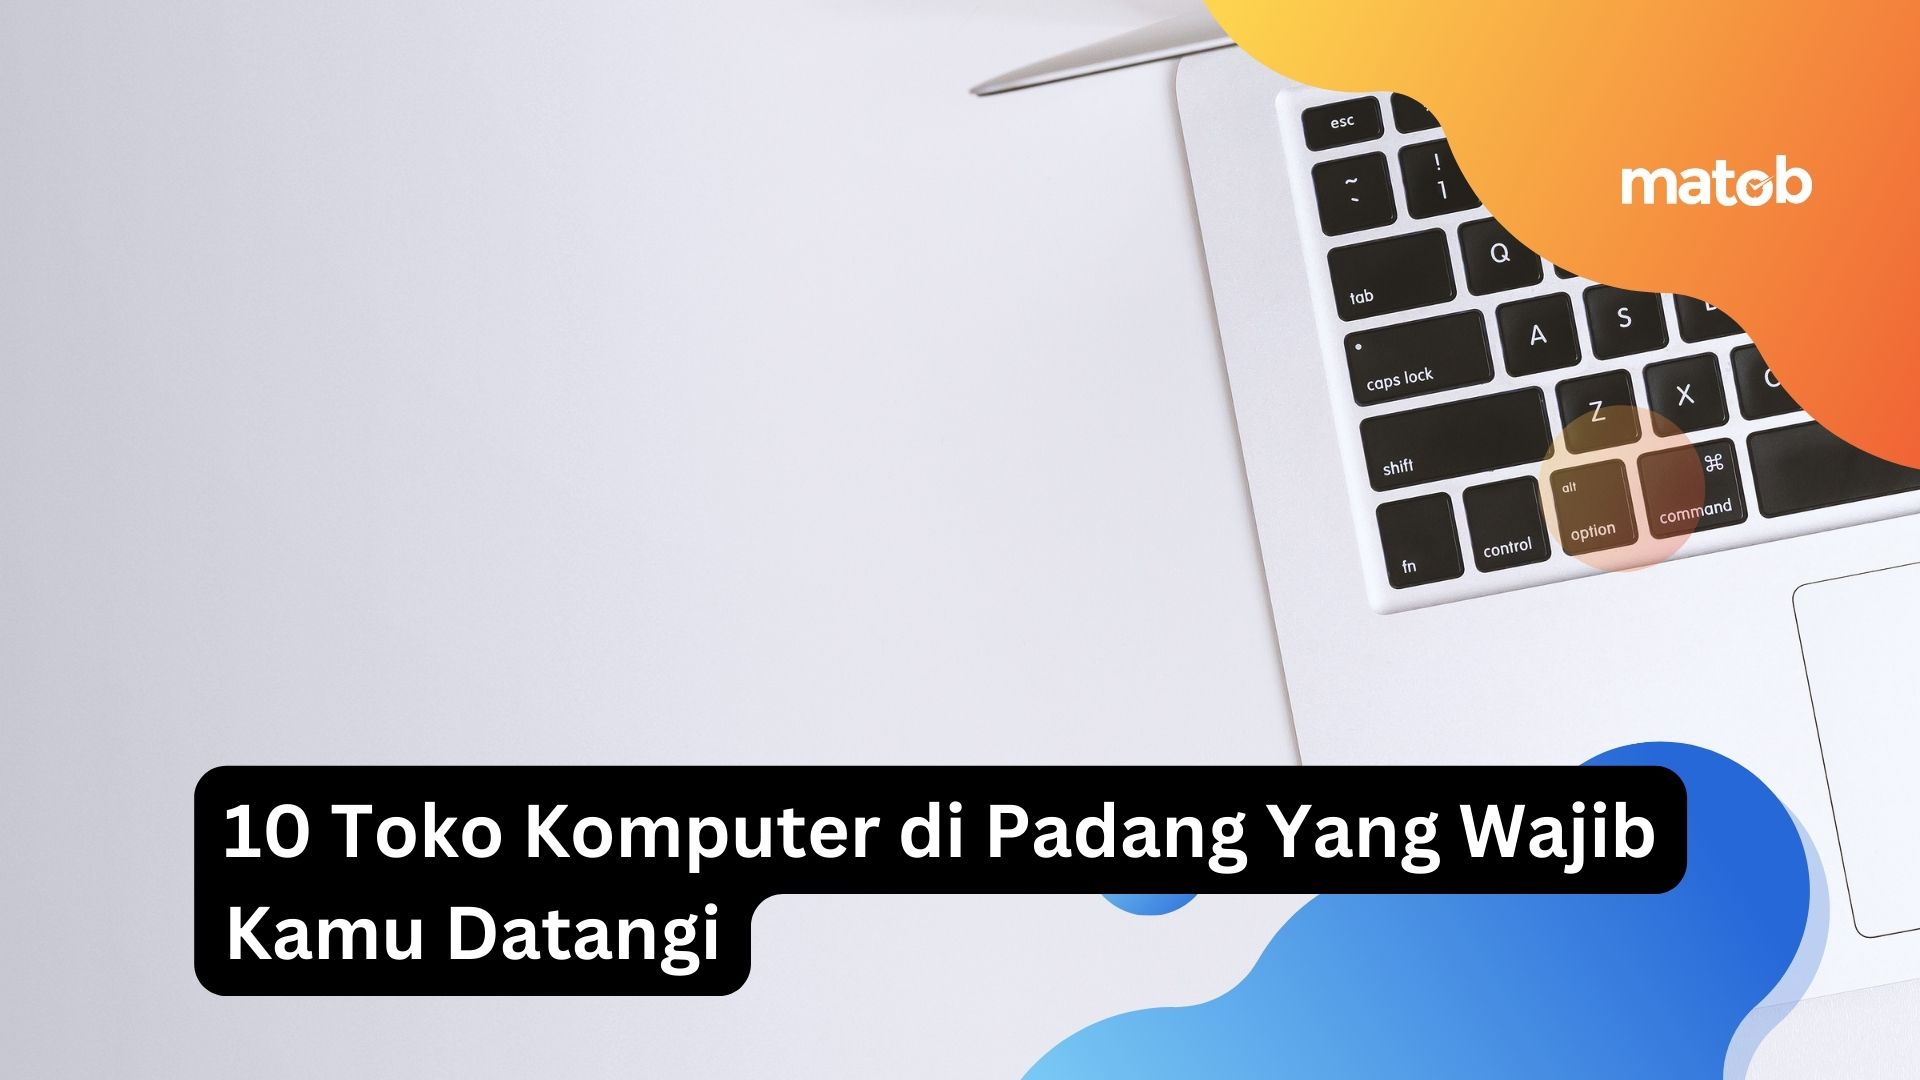 10 Toko Komputer di Padang Yang Wajib Kamu Datangi